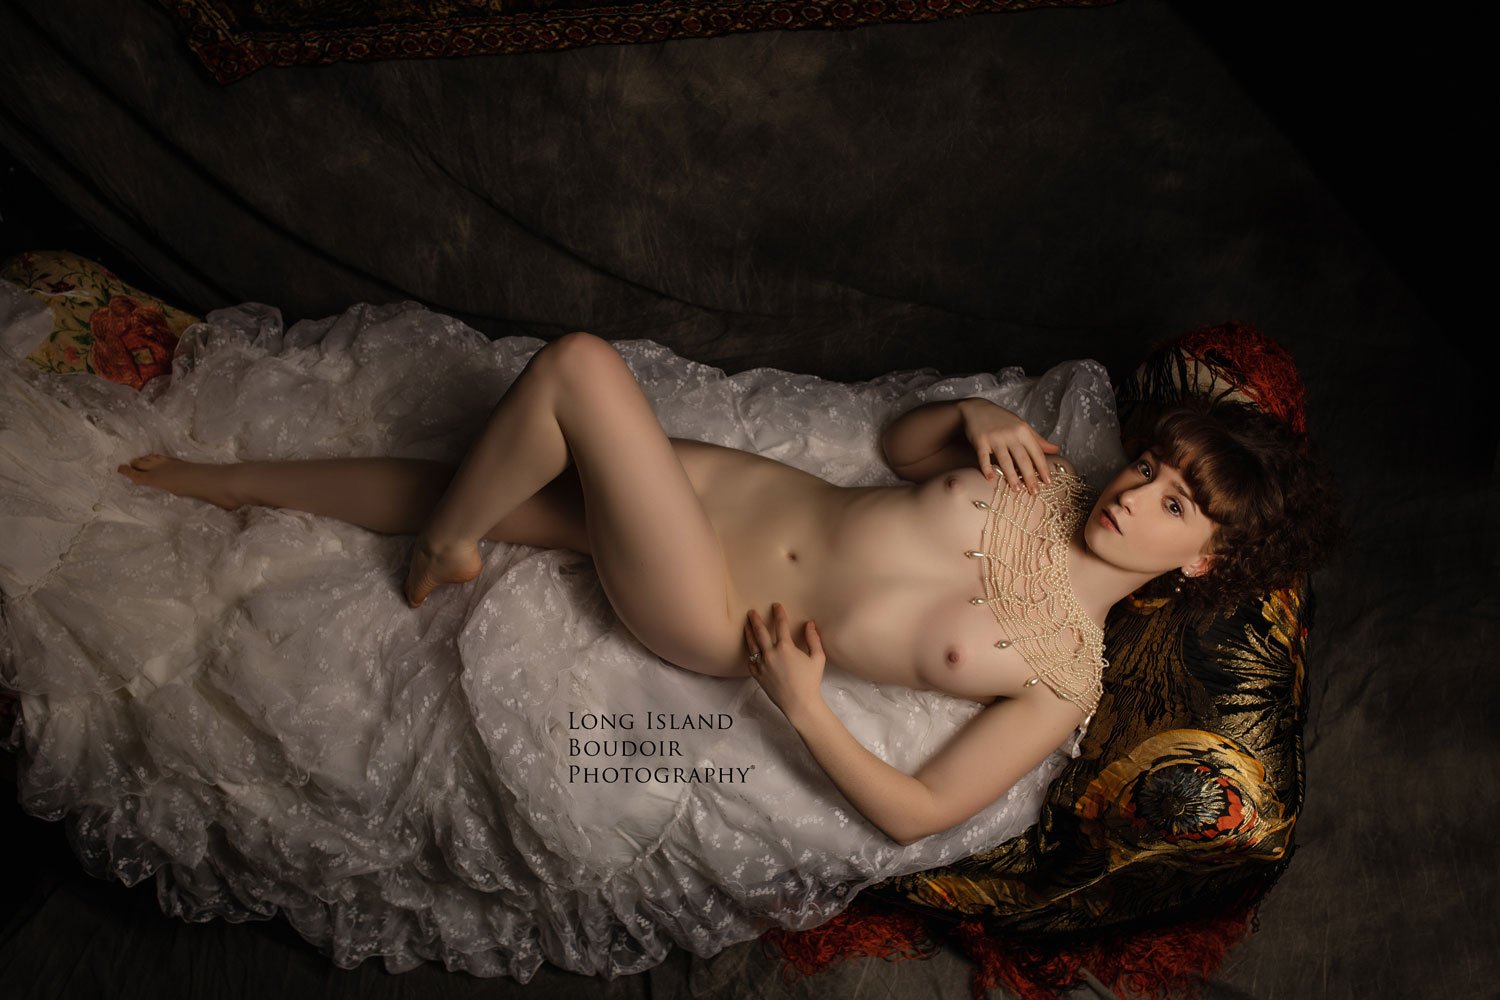 fine-art-nude-photography-on-long-island-boudoir-by-susan-photographer.jpg